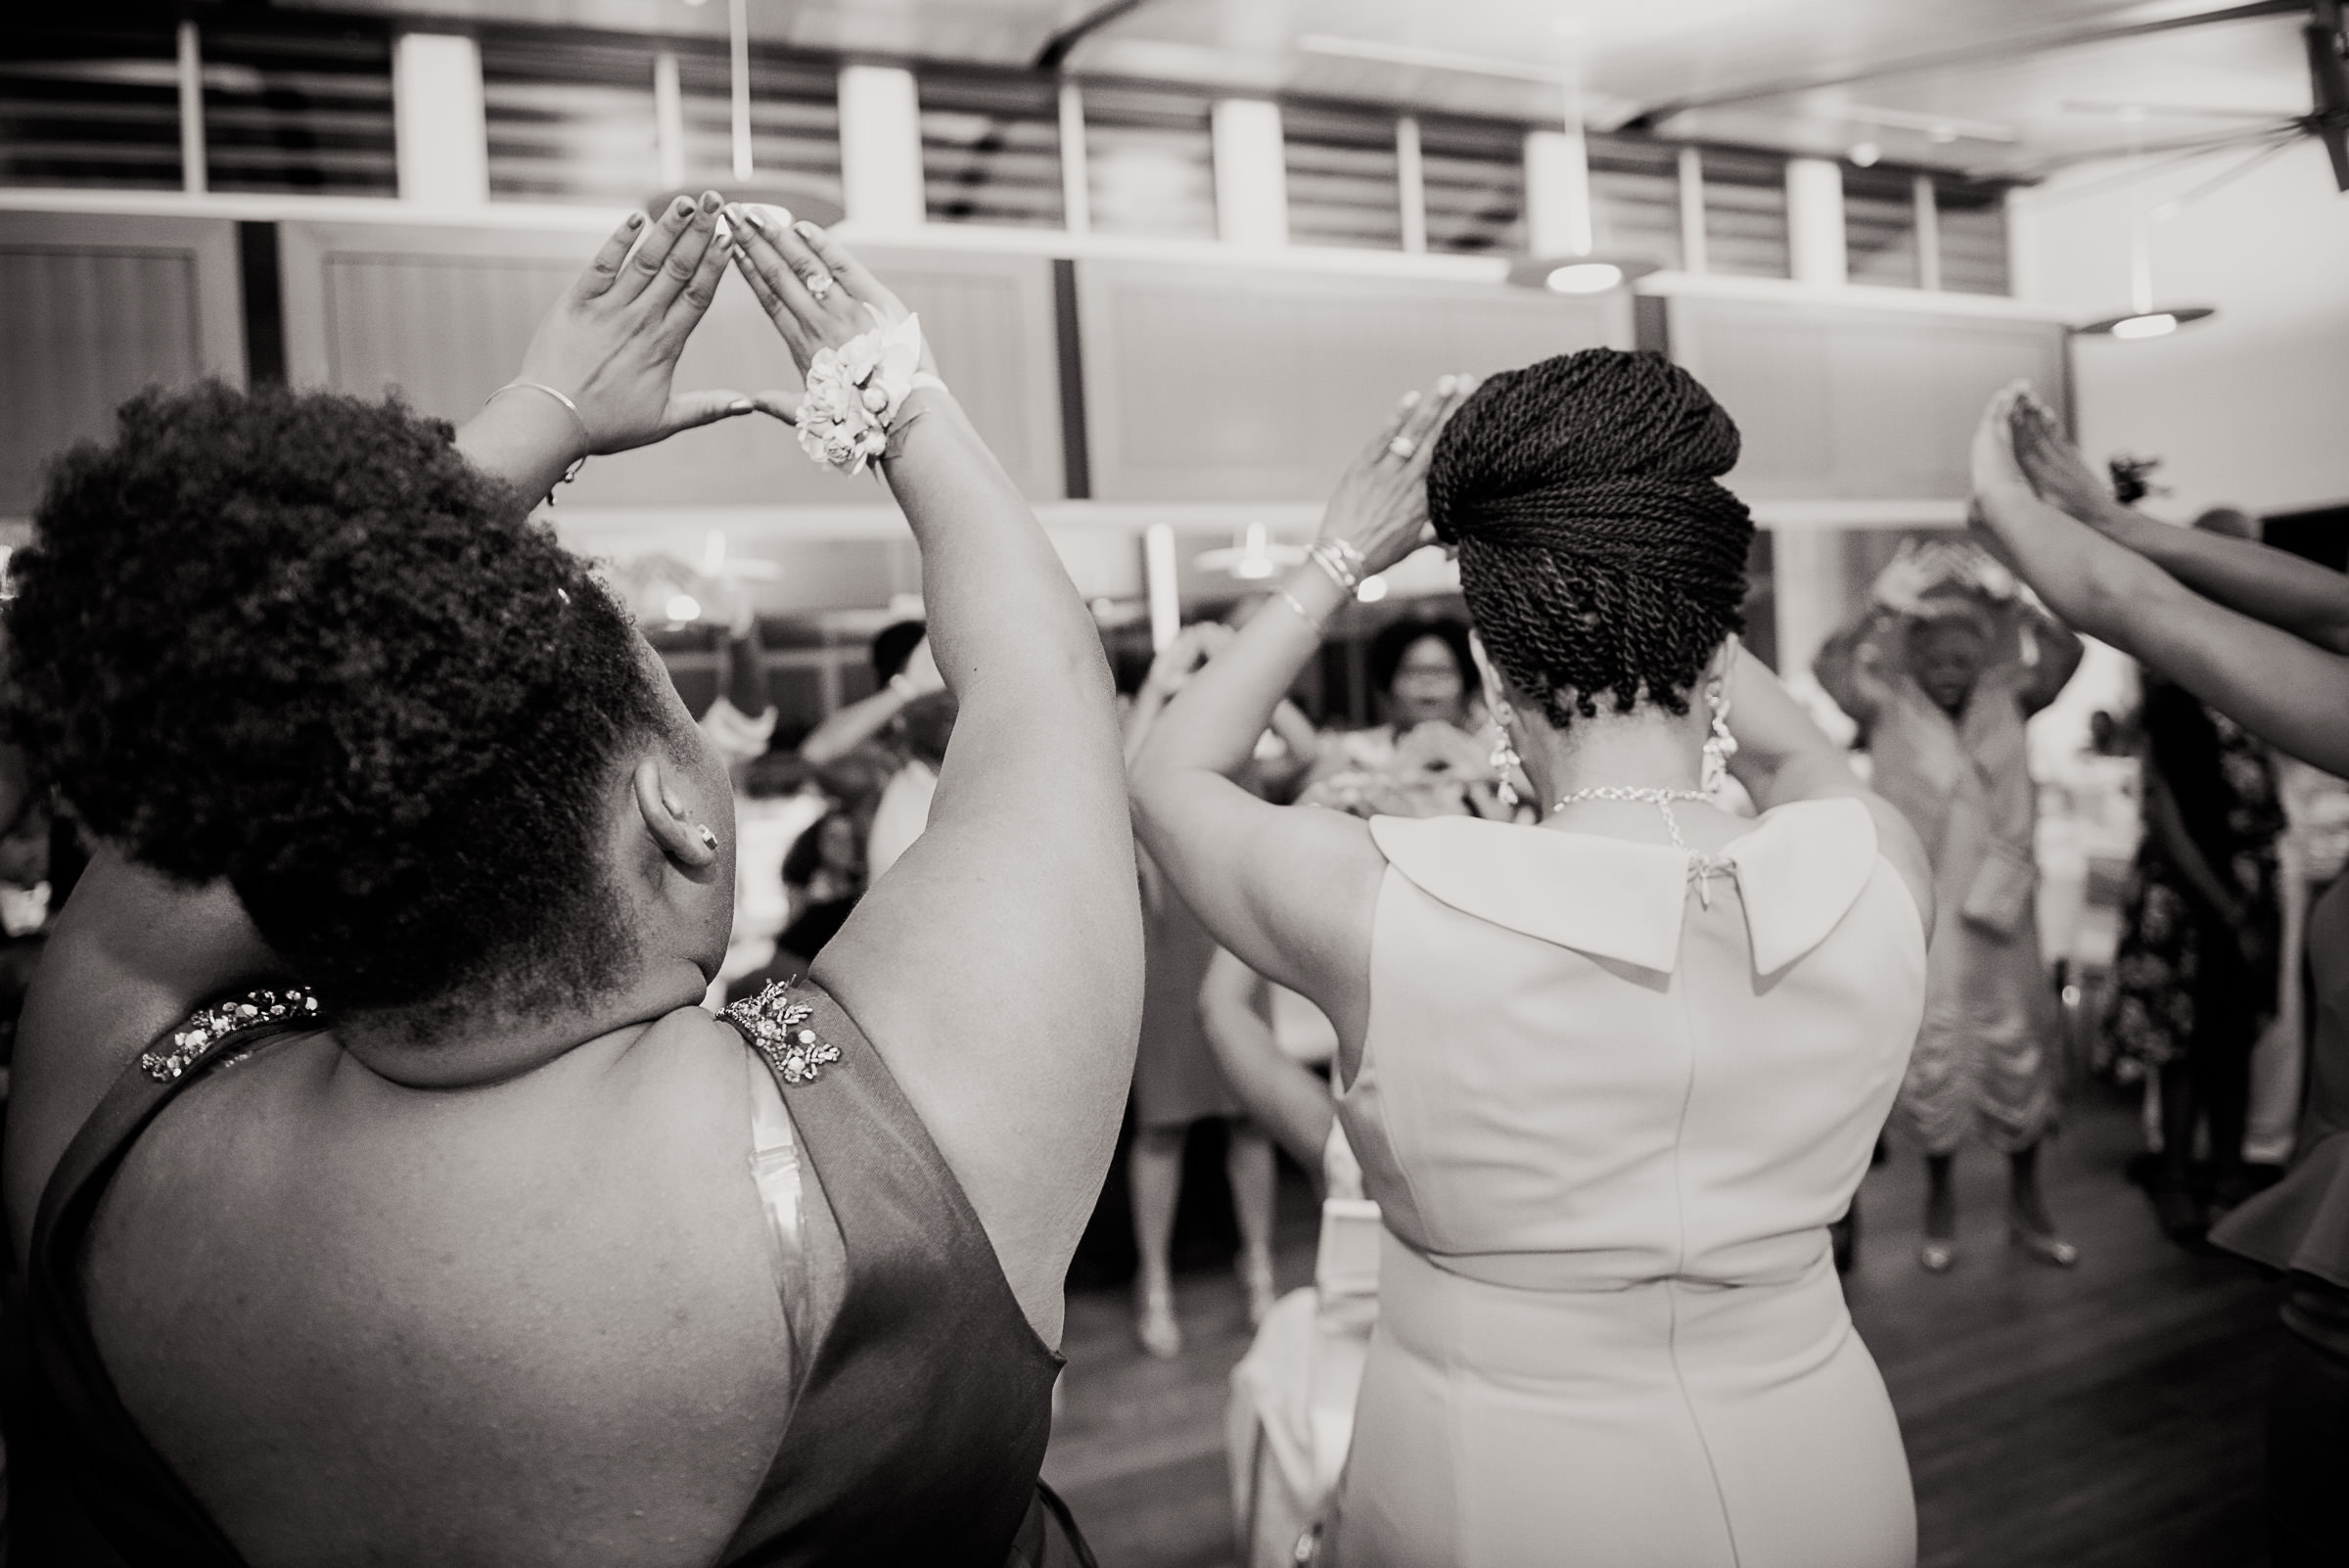 Delta Sigma Theta sorority sisters signaling to their bride sister